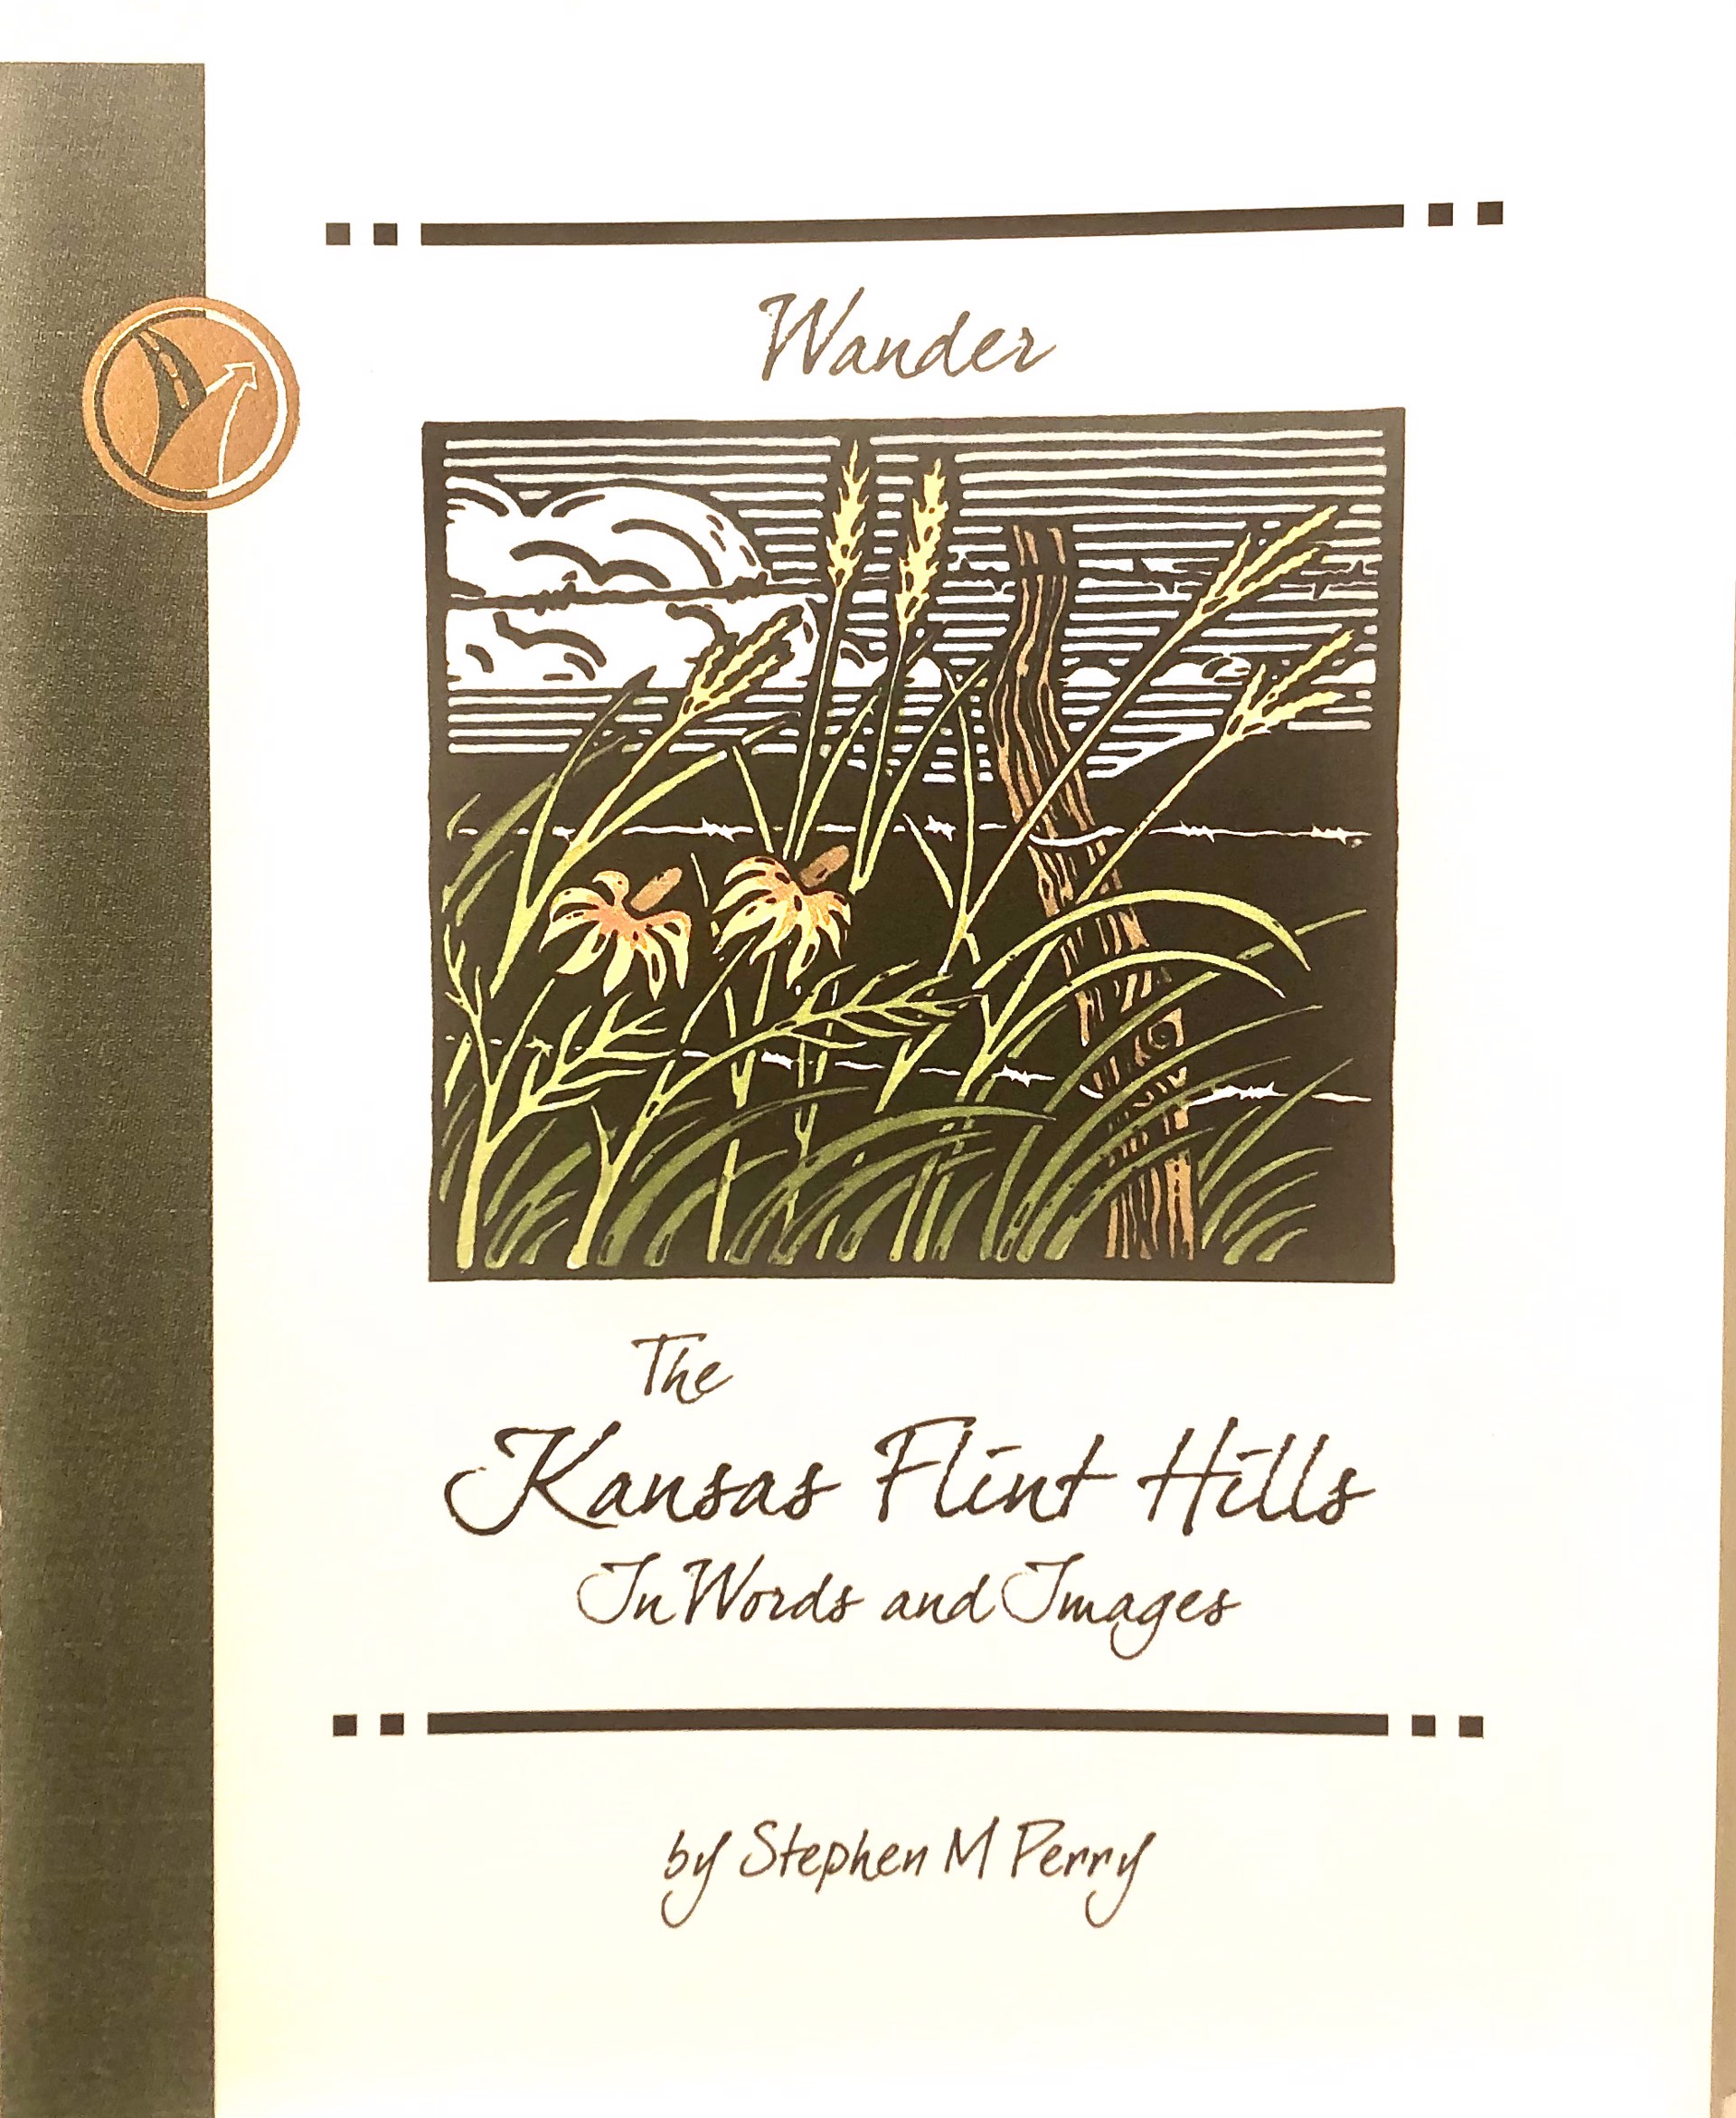 Wander the Kansas Flint Hills by Stephen Perry